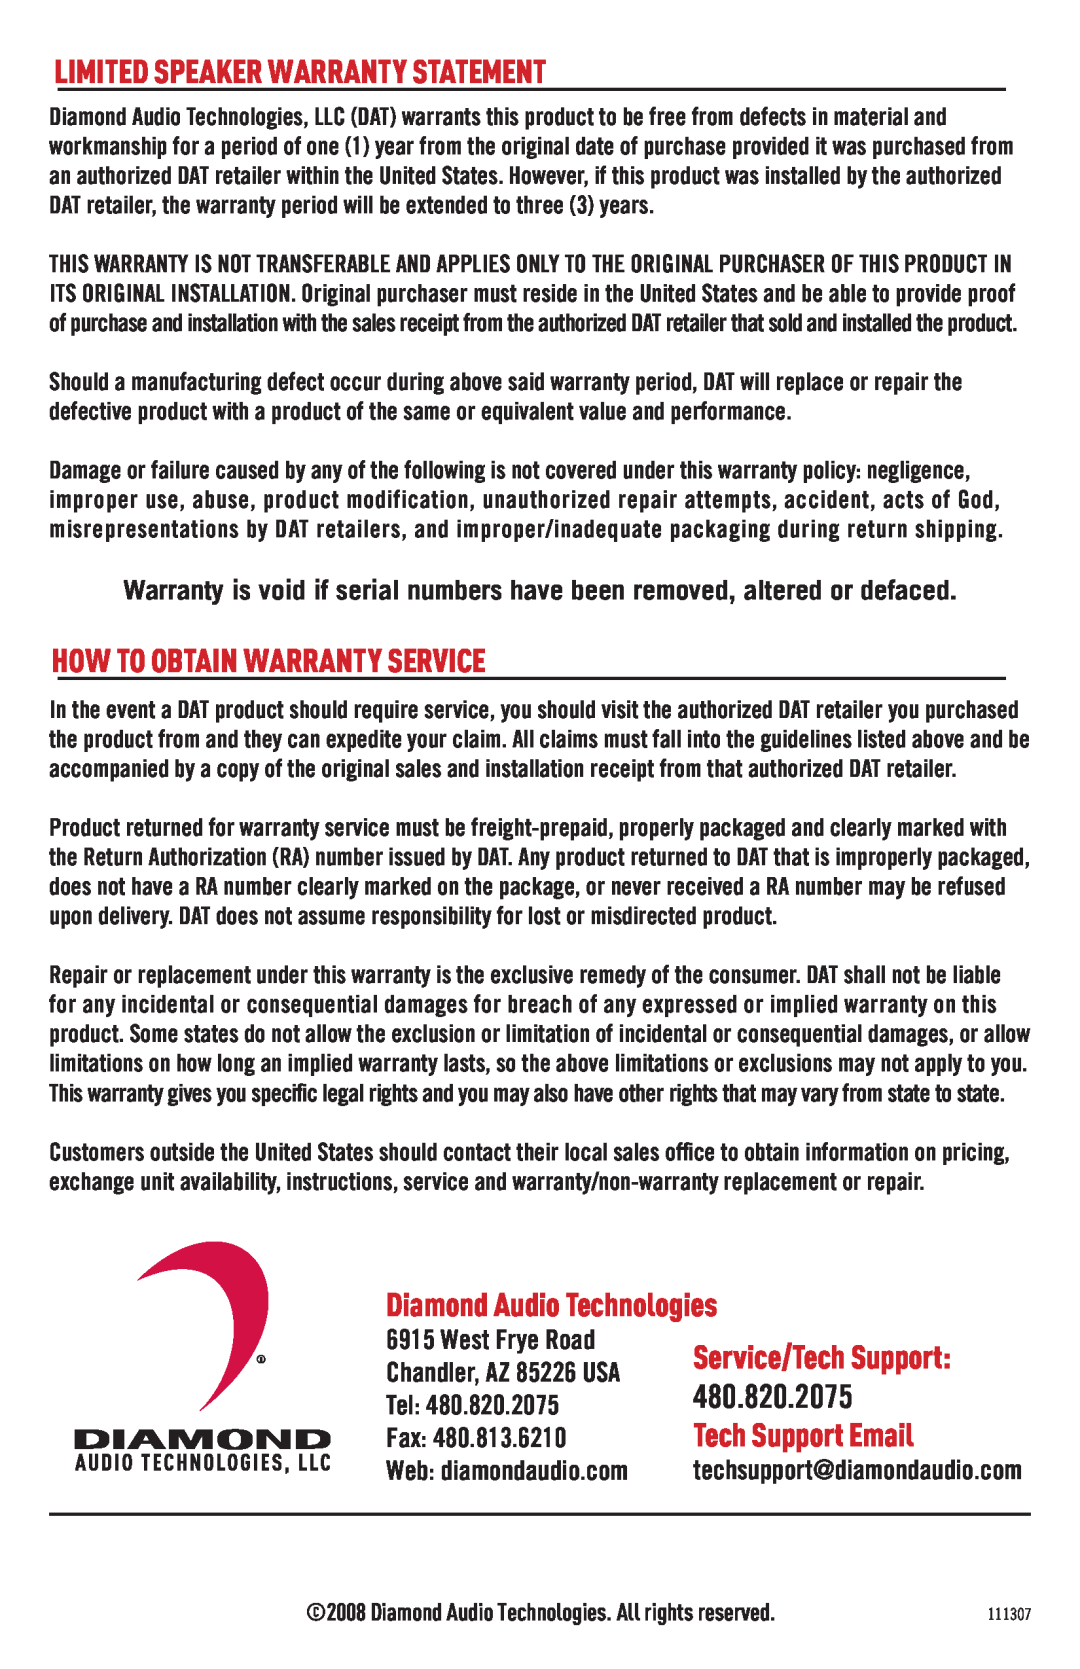 Diamond Audio Technology S104 480.820.2075, Limited Speaker Warranty Statement, How To Obtain Warranty Service, Tel, Fax 